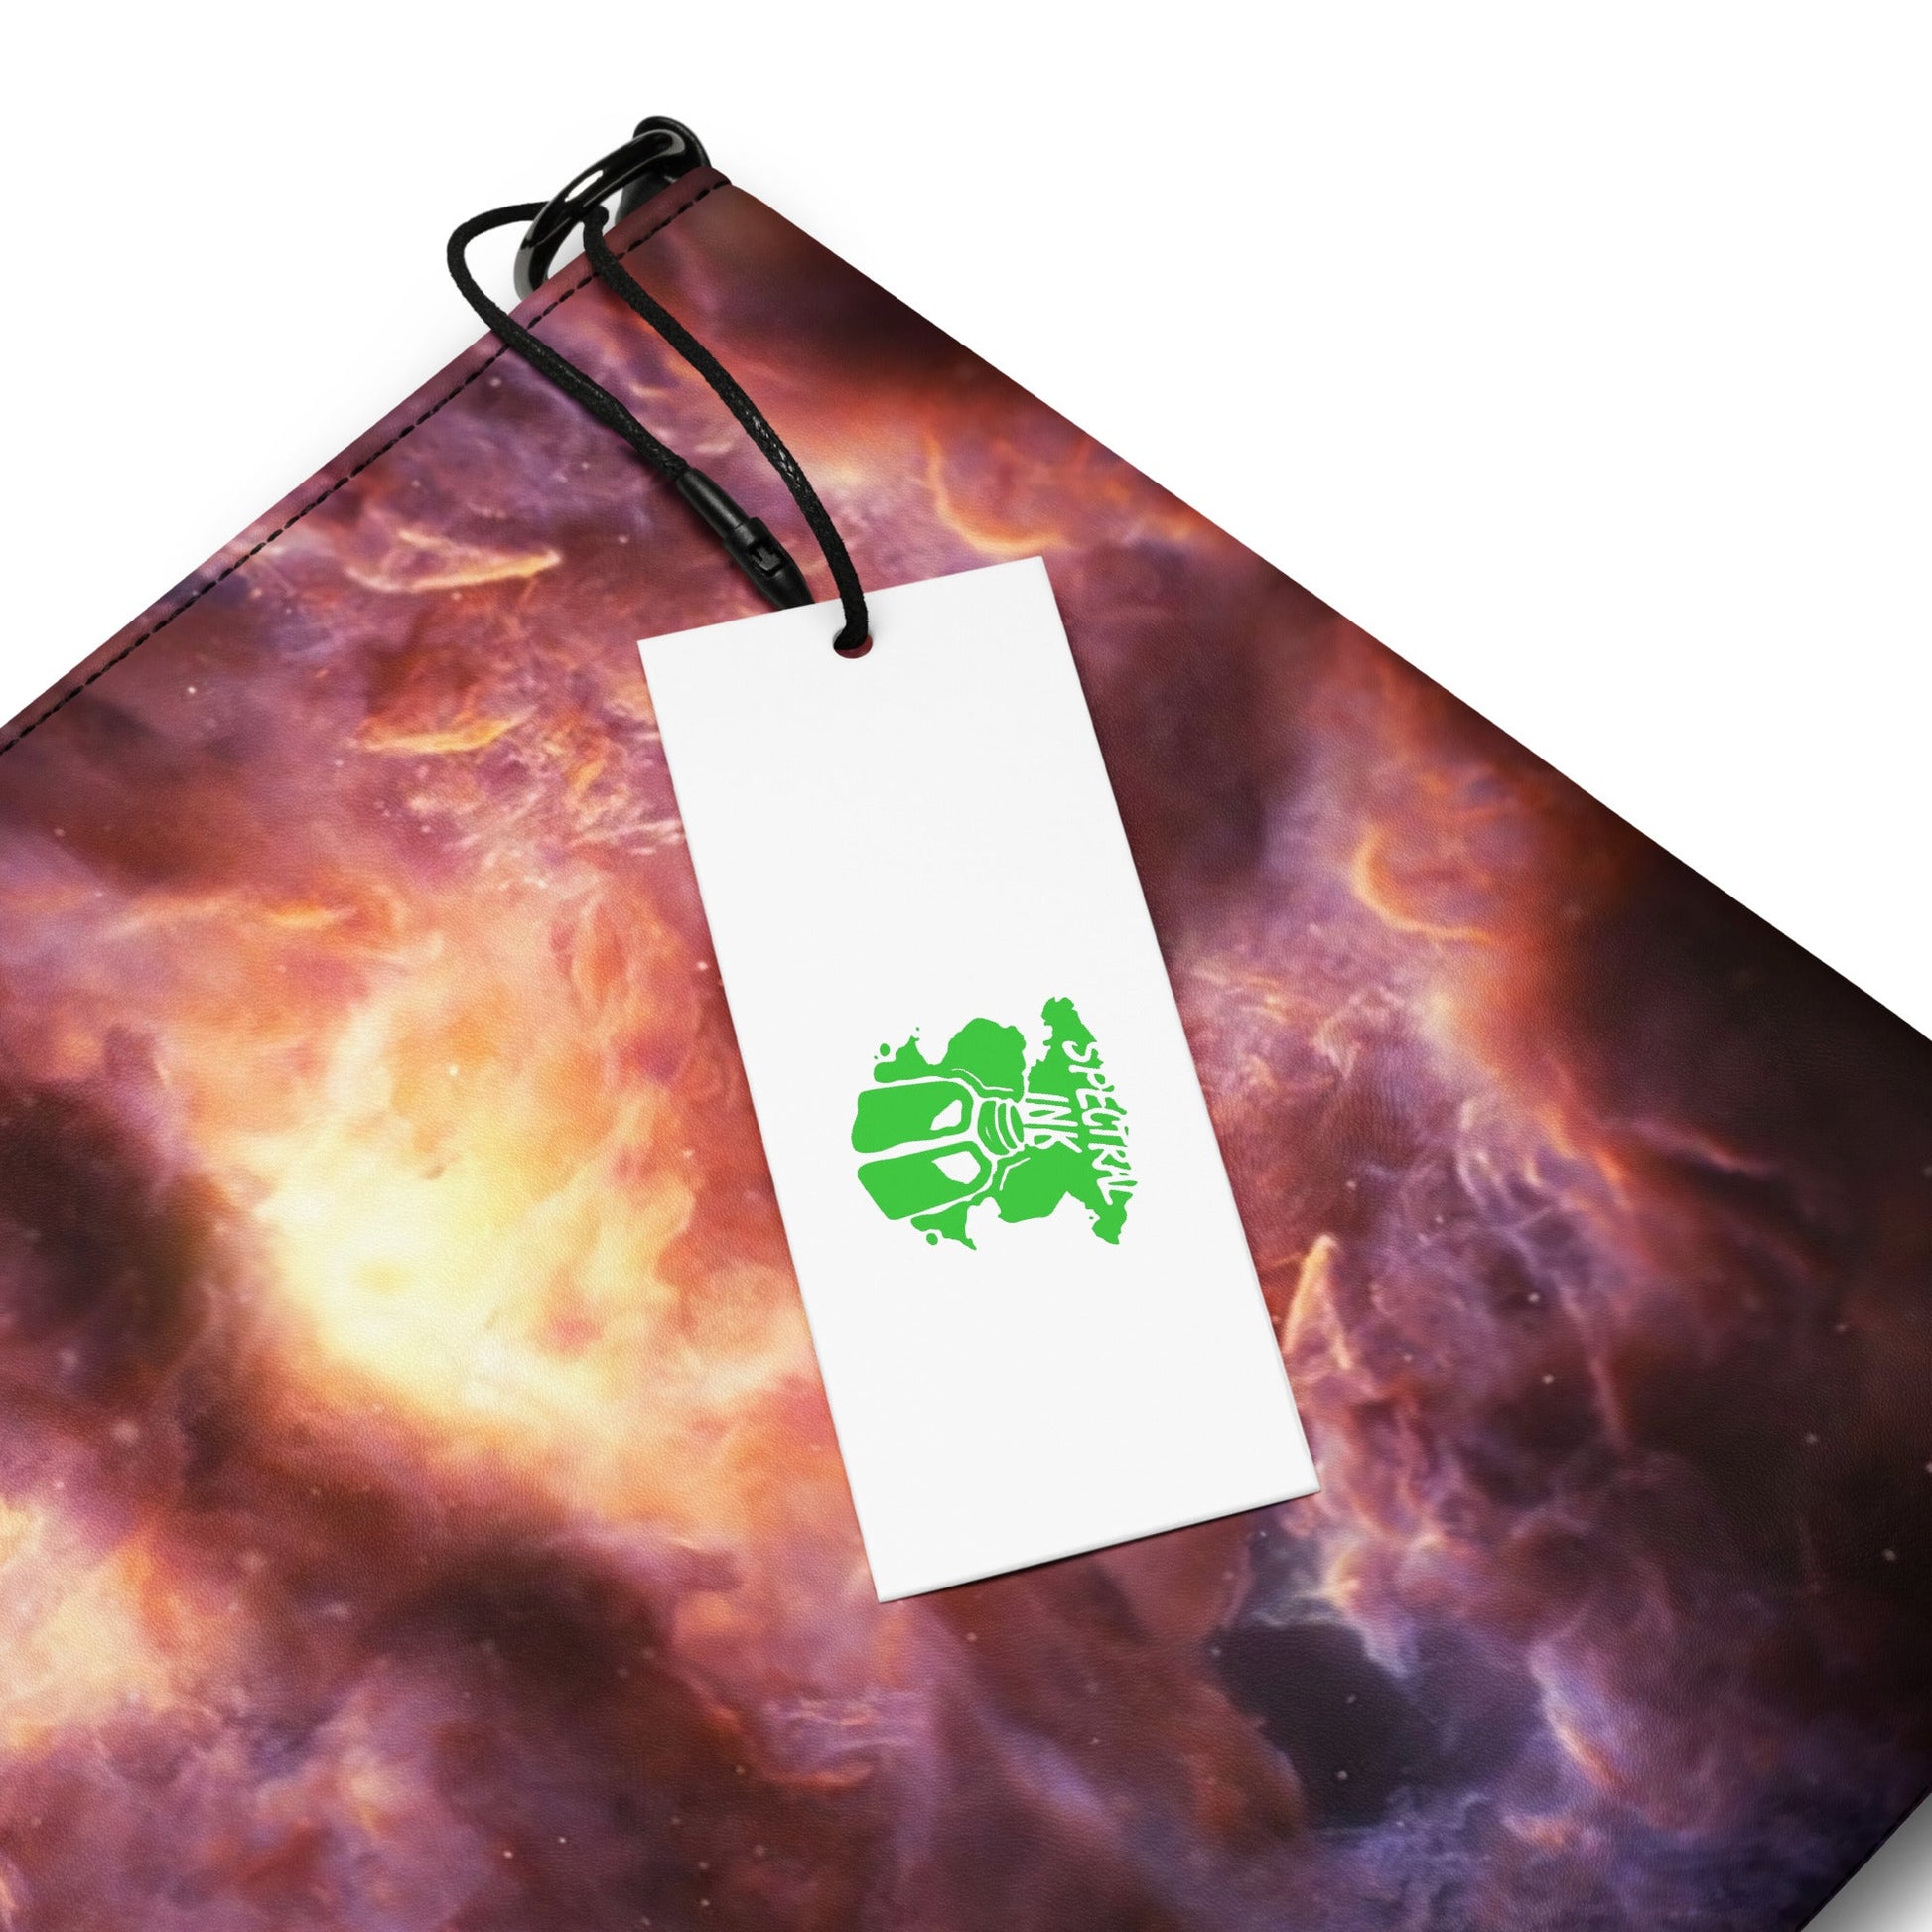 Crossbody bag |Intergalactic Space Force 2 | Nebula - Spectral Ink Shop - Crossbody bag -4068602_16708